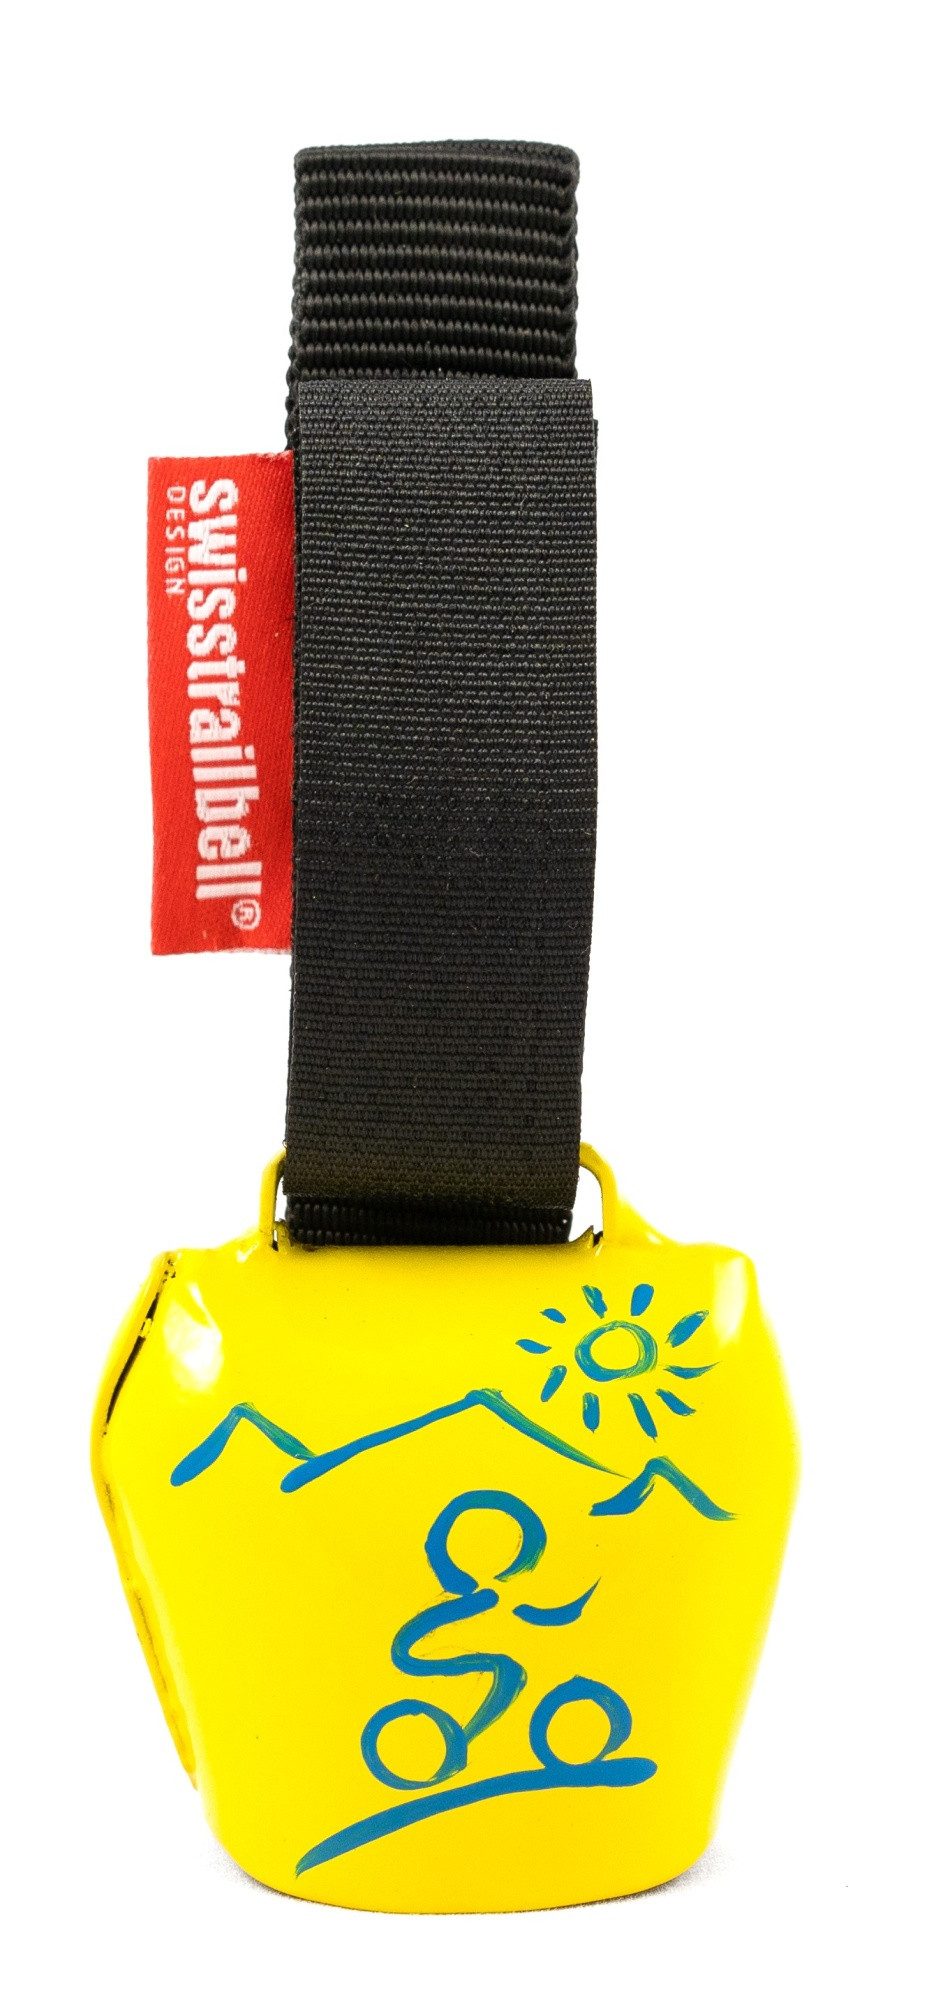 swisstrailbell Fahrradklingel fresh Colour: Gelb mit blauem Mountainbiker, schwarzes Band, Trailbell